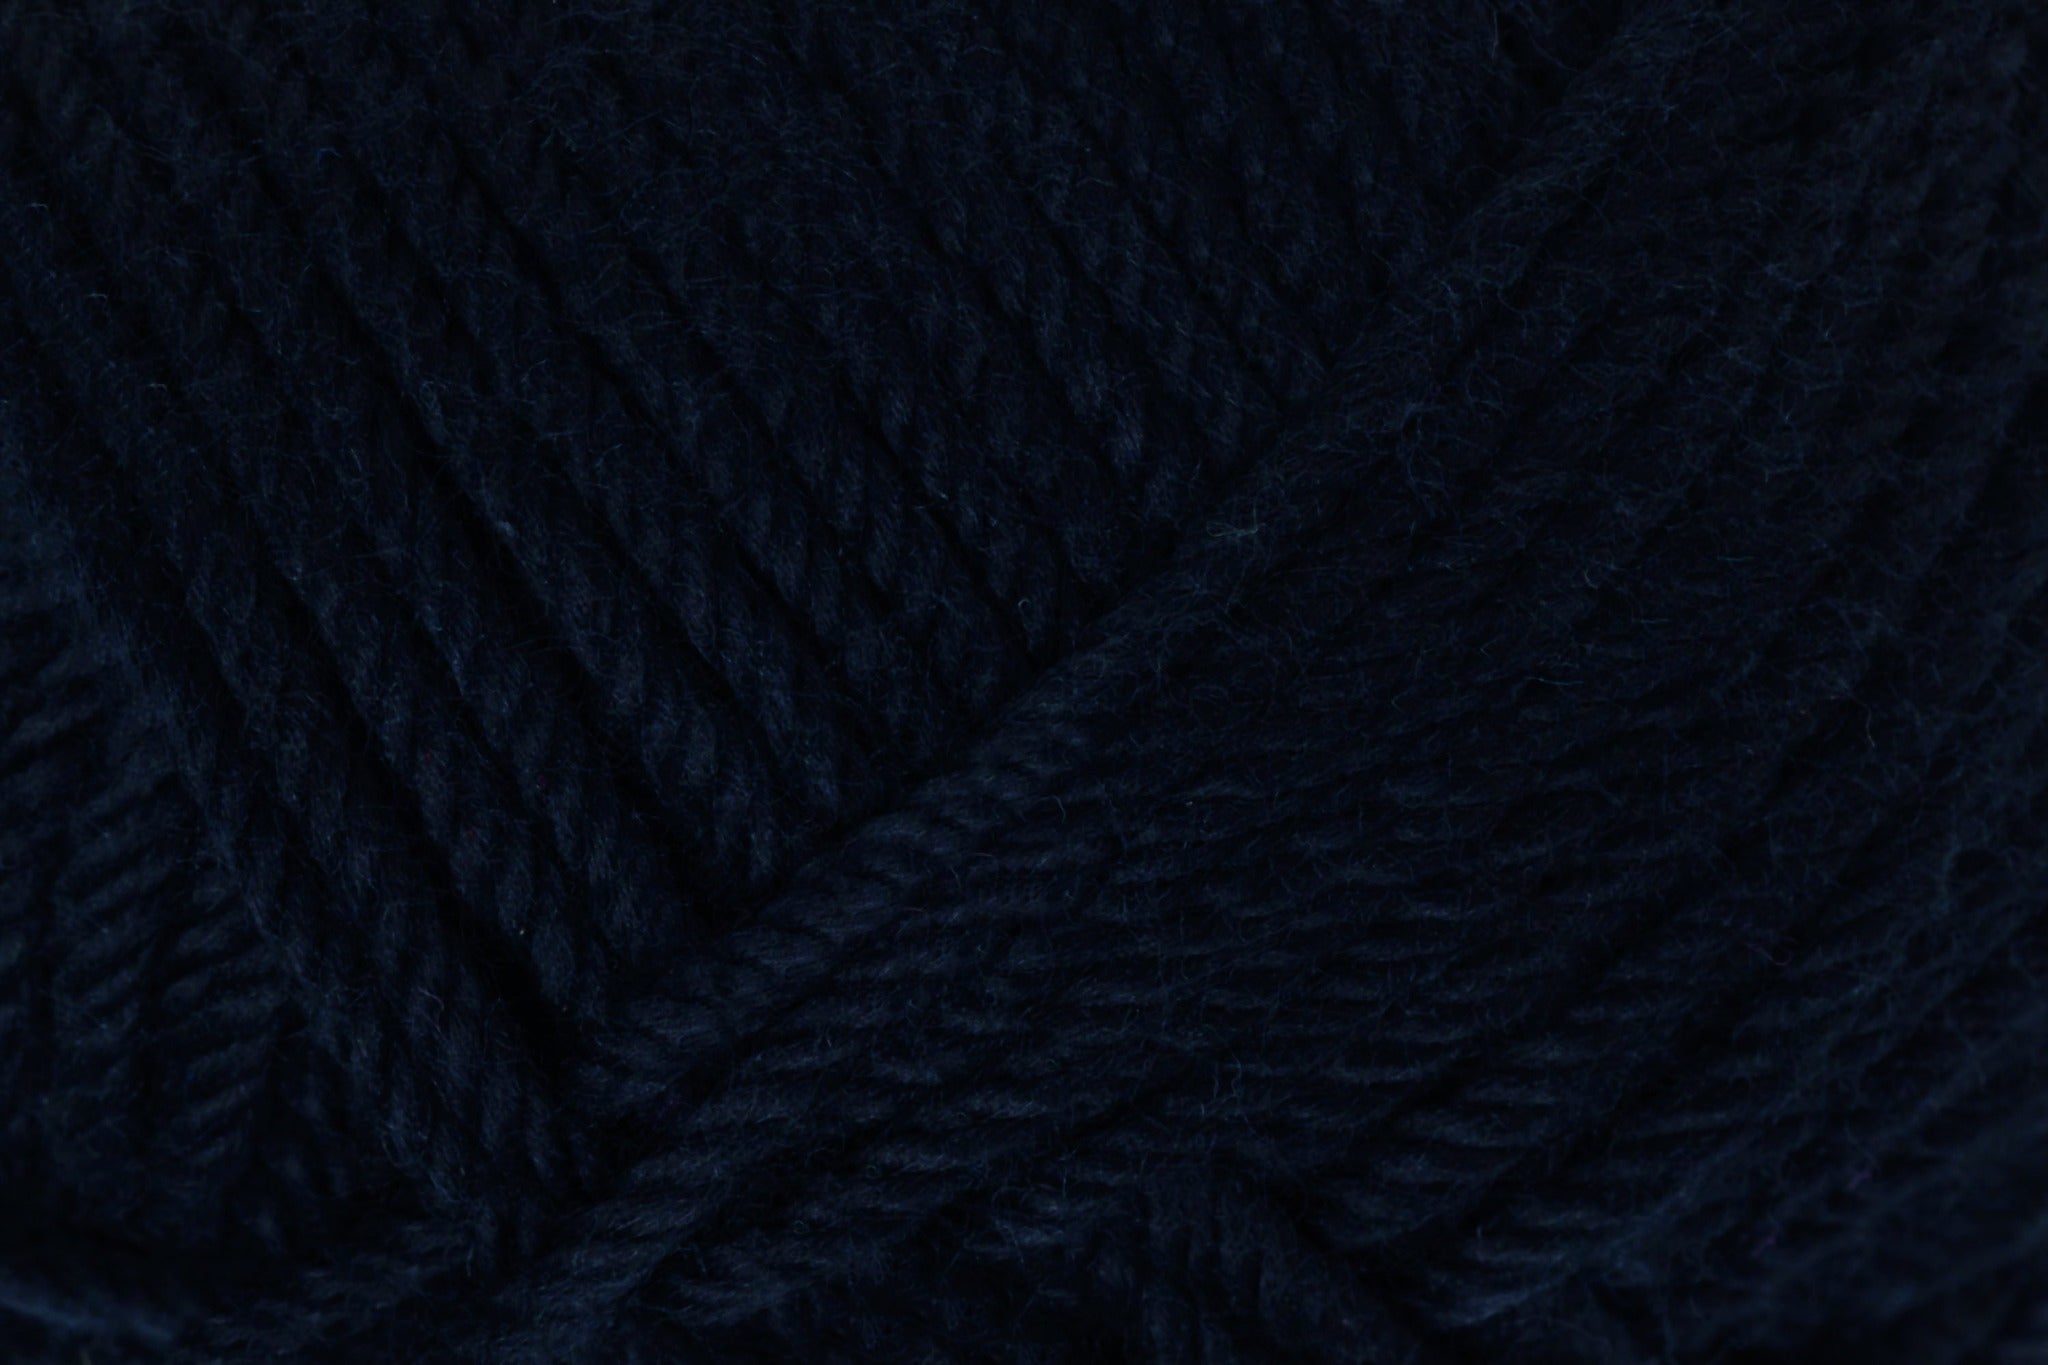 Rowan Handknit Cotton Black-252